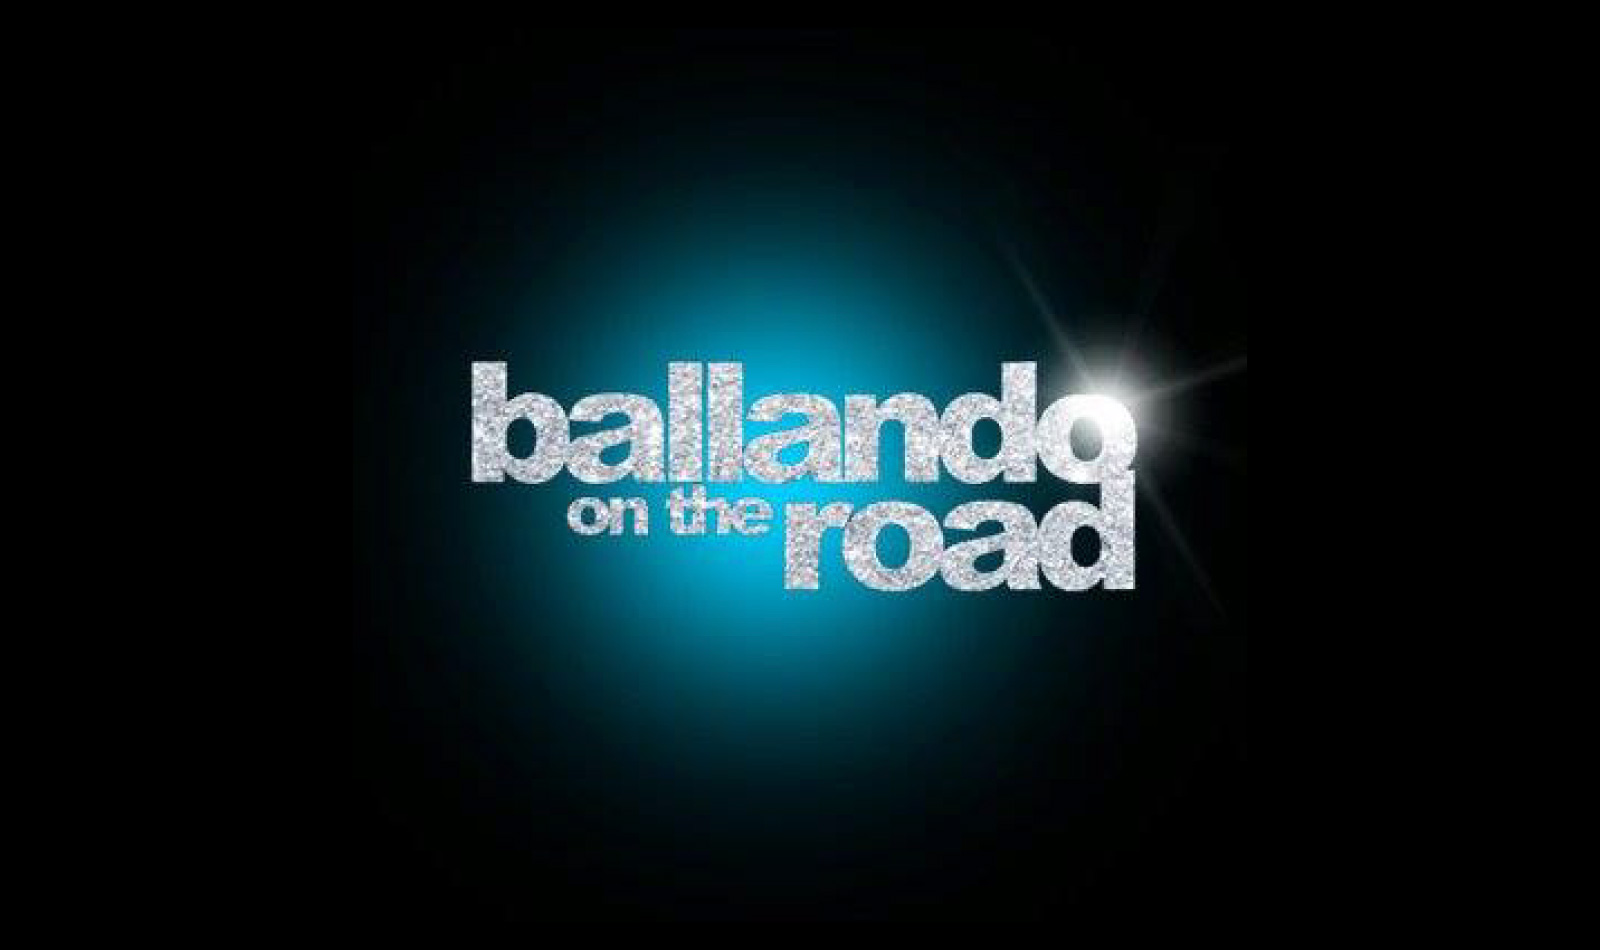 ballando-on-the-road